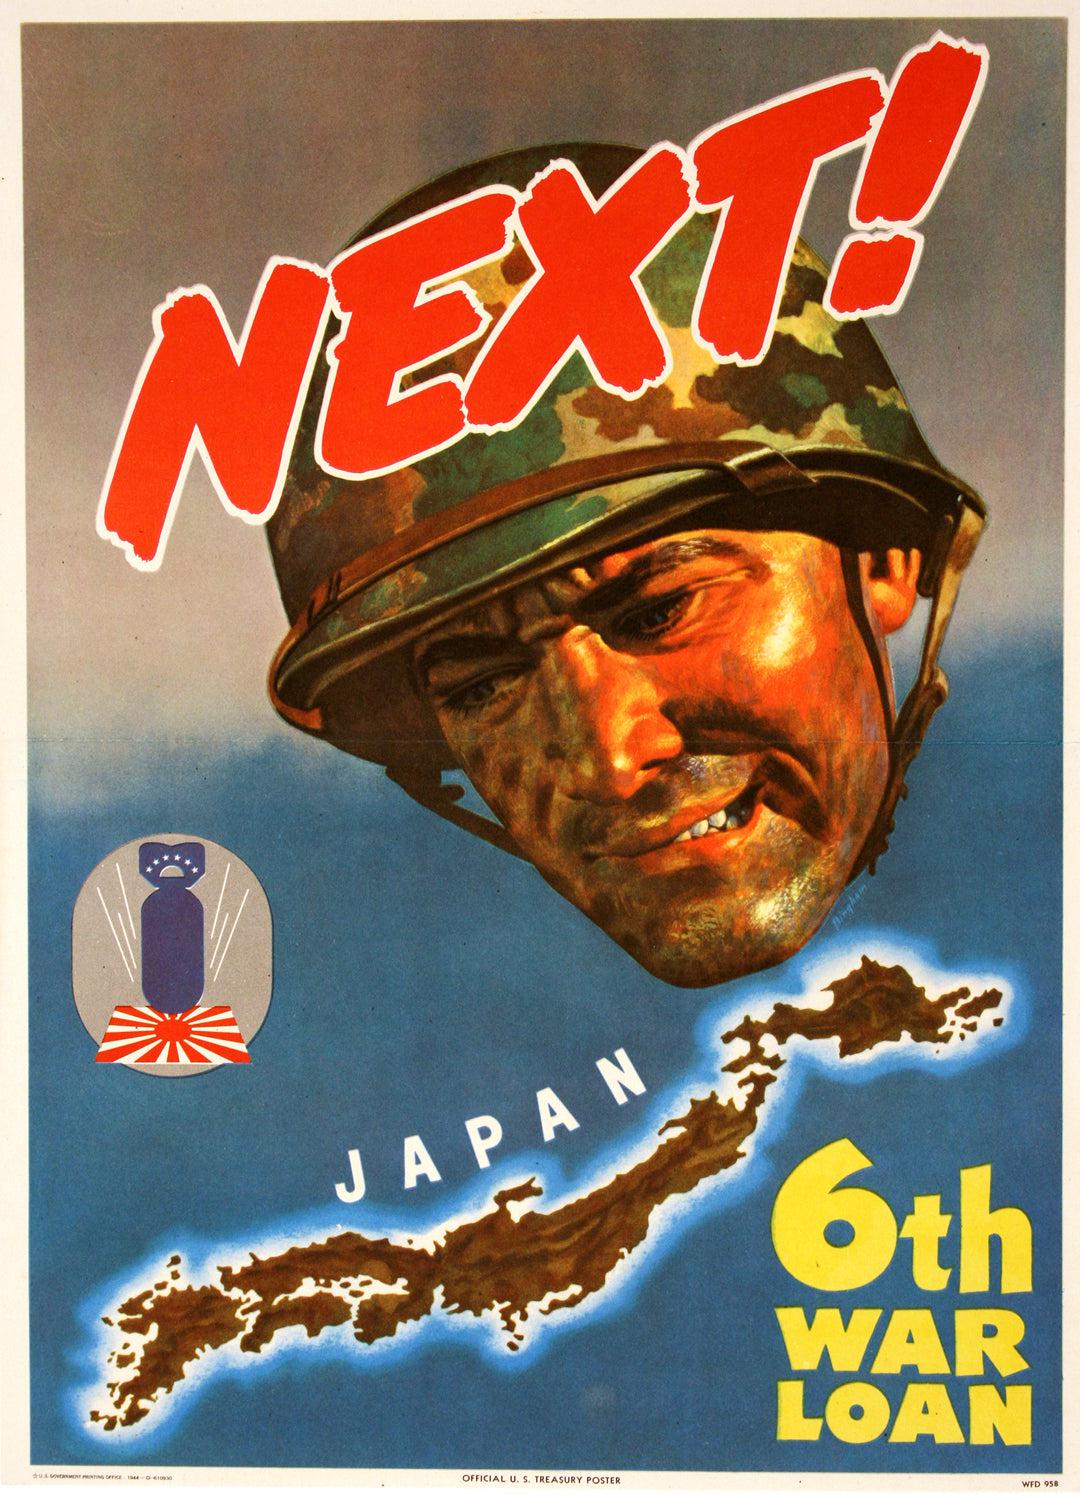 Original American WWII 1944 Poster by Bingham - Next 6th War Loan Large